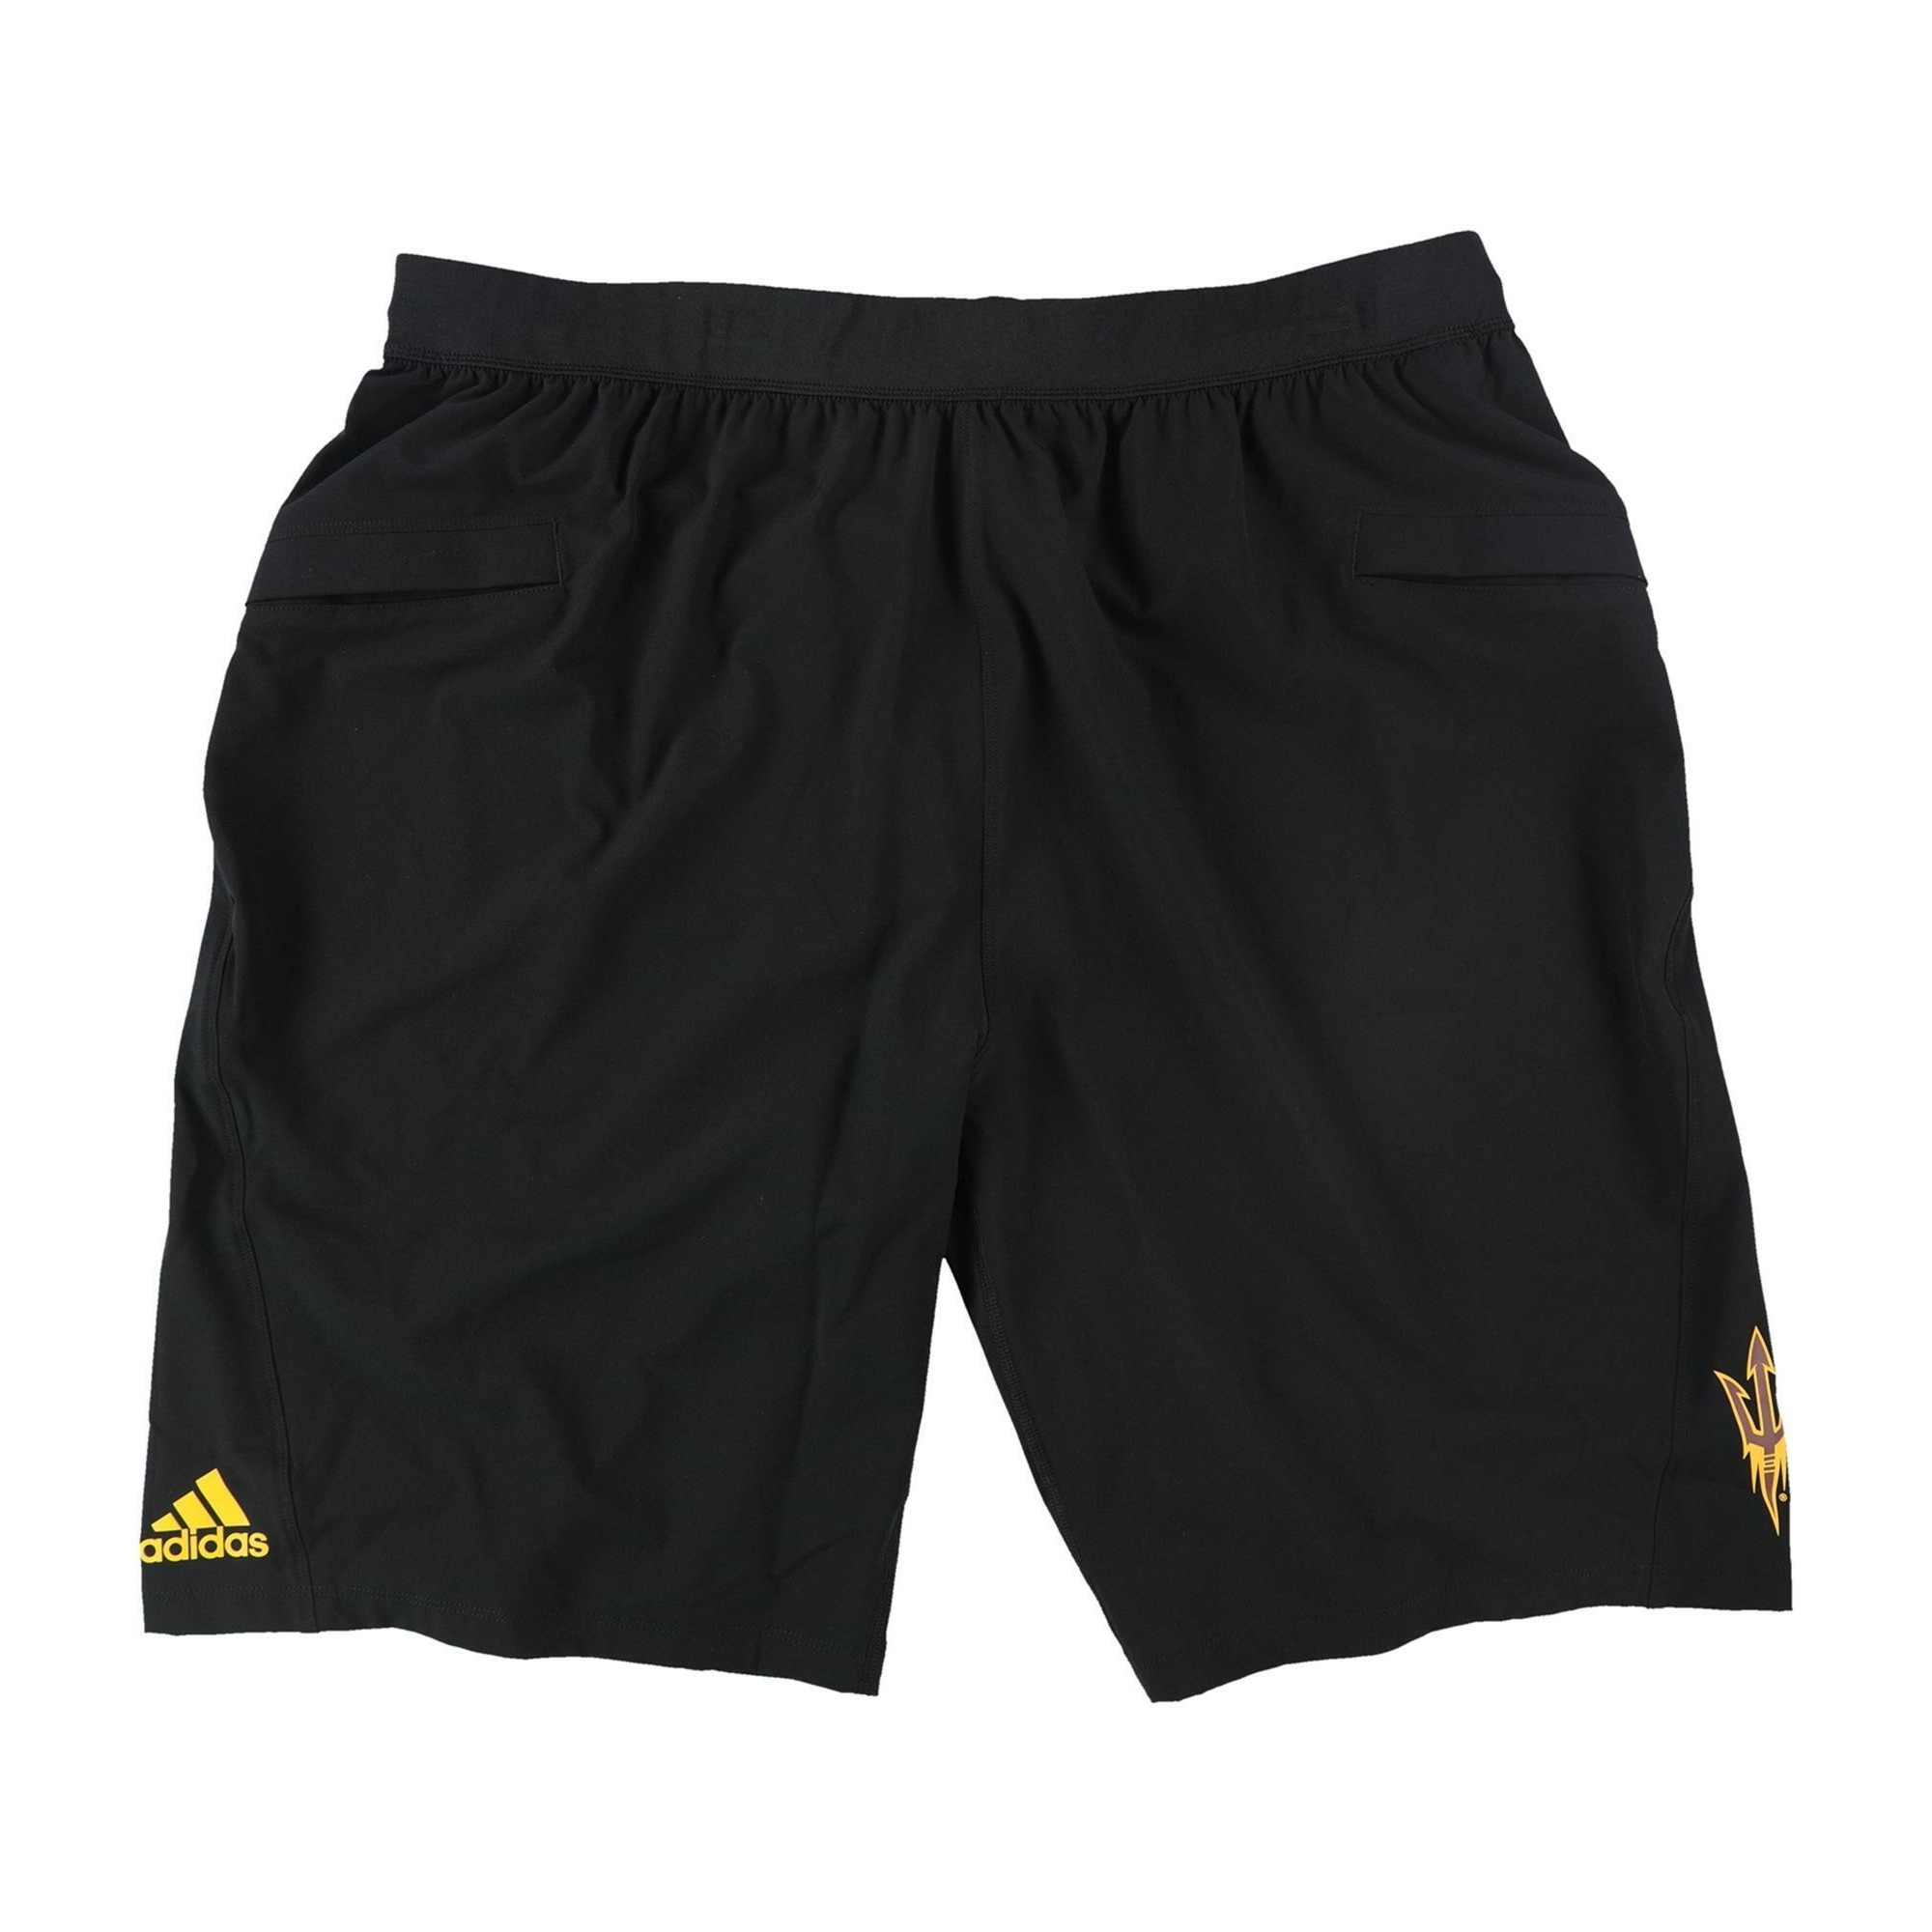 Adidas Mens College Team Logo Athletic Workout Shorts, Style # 533BA alternate image